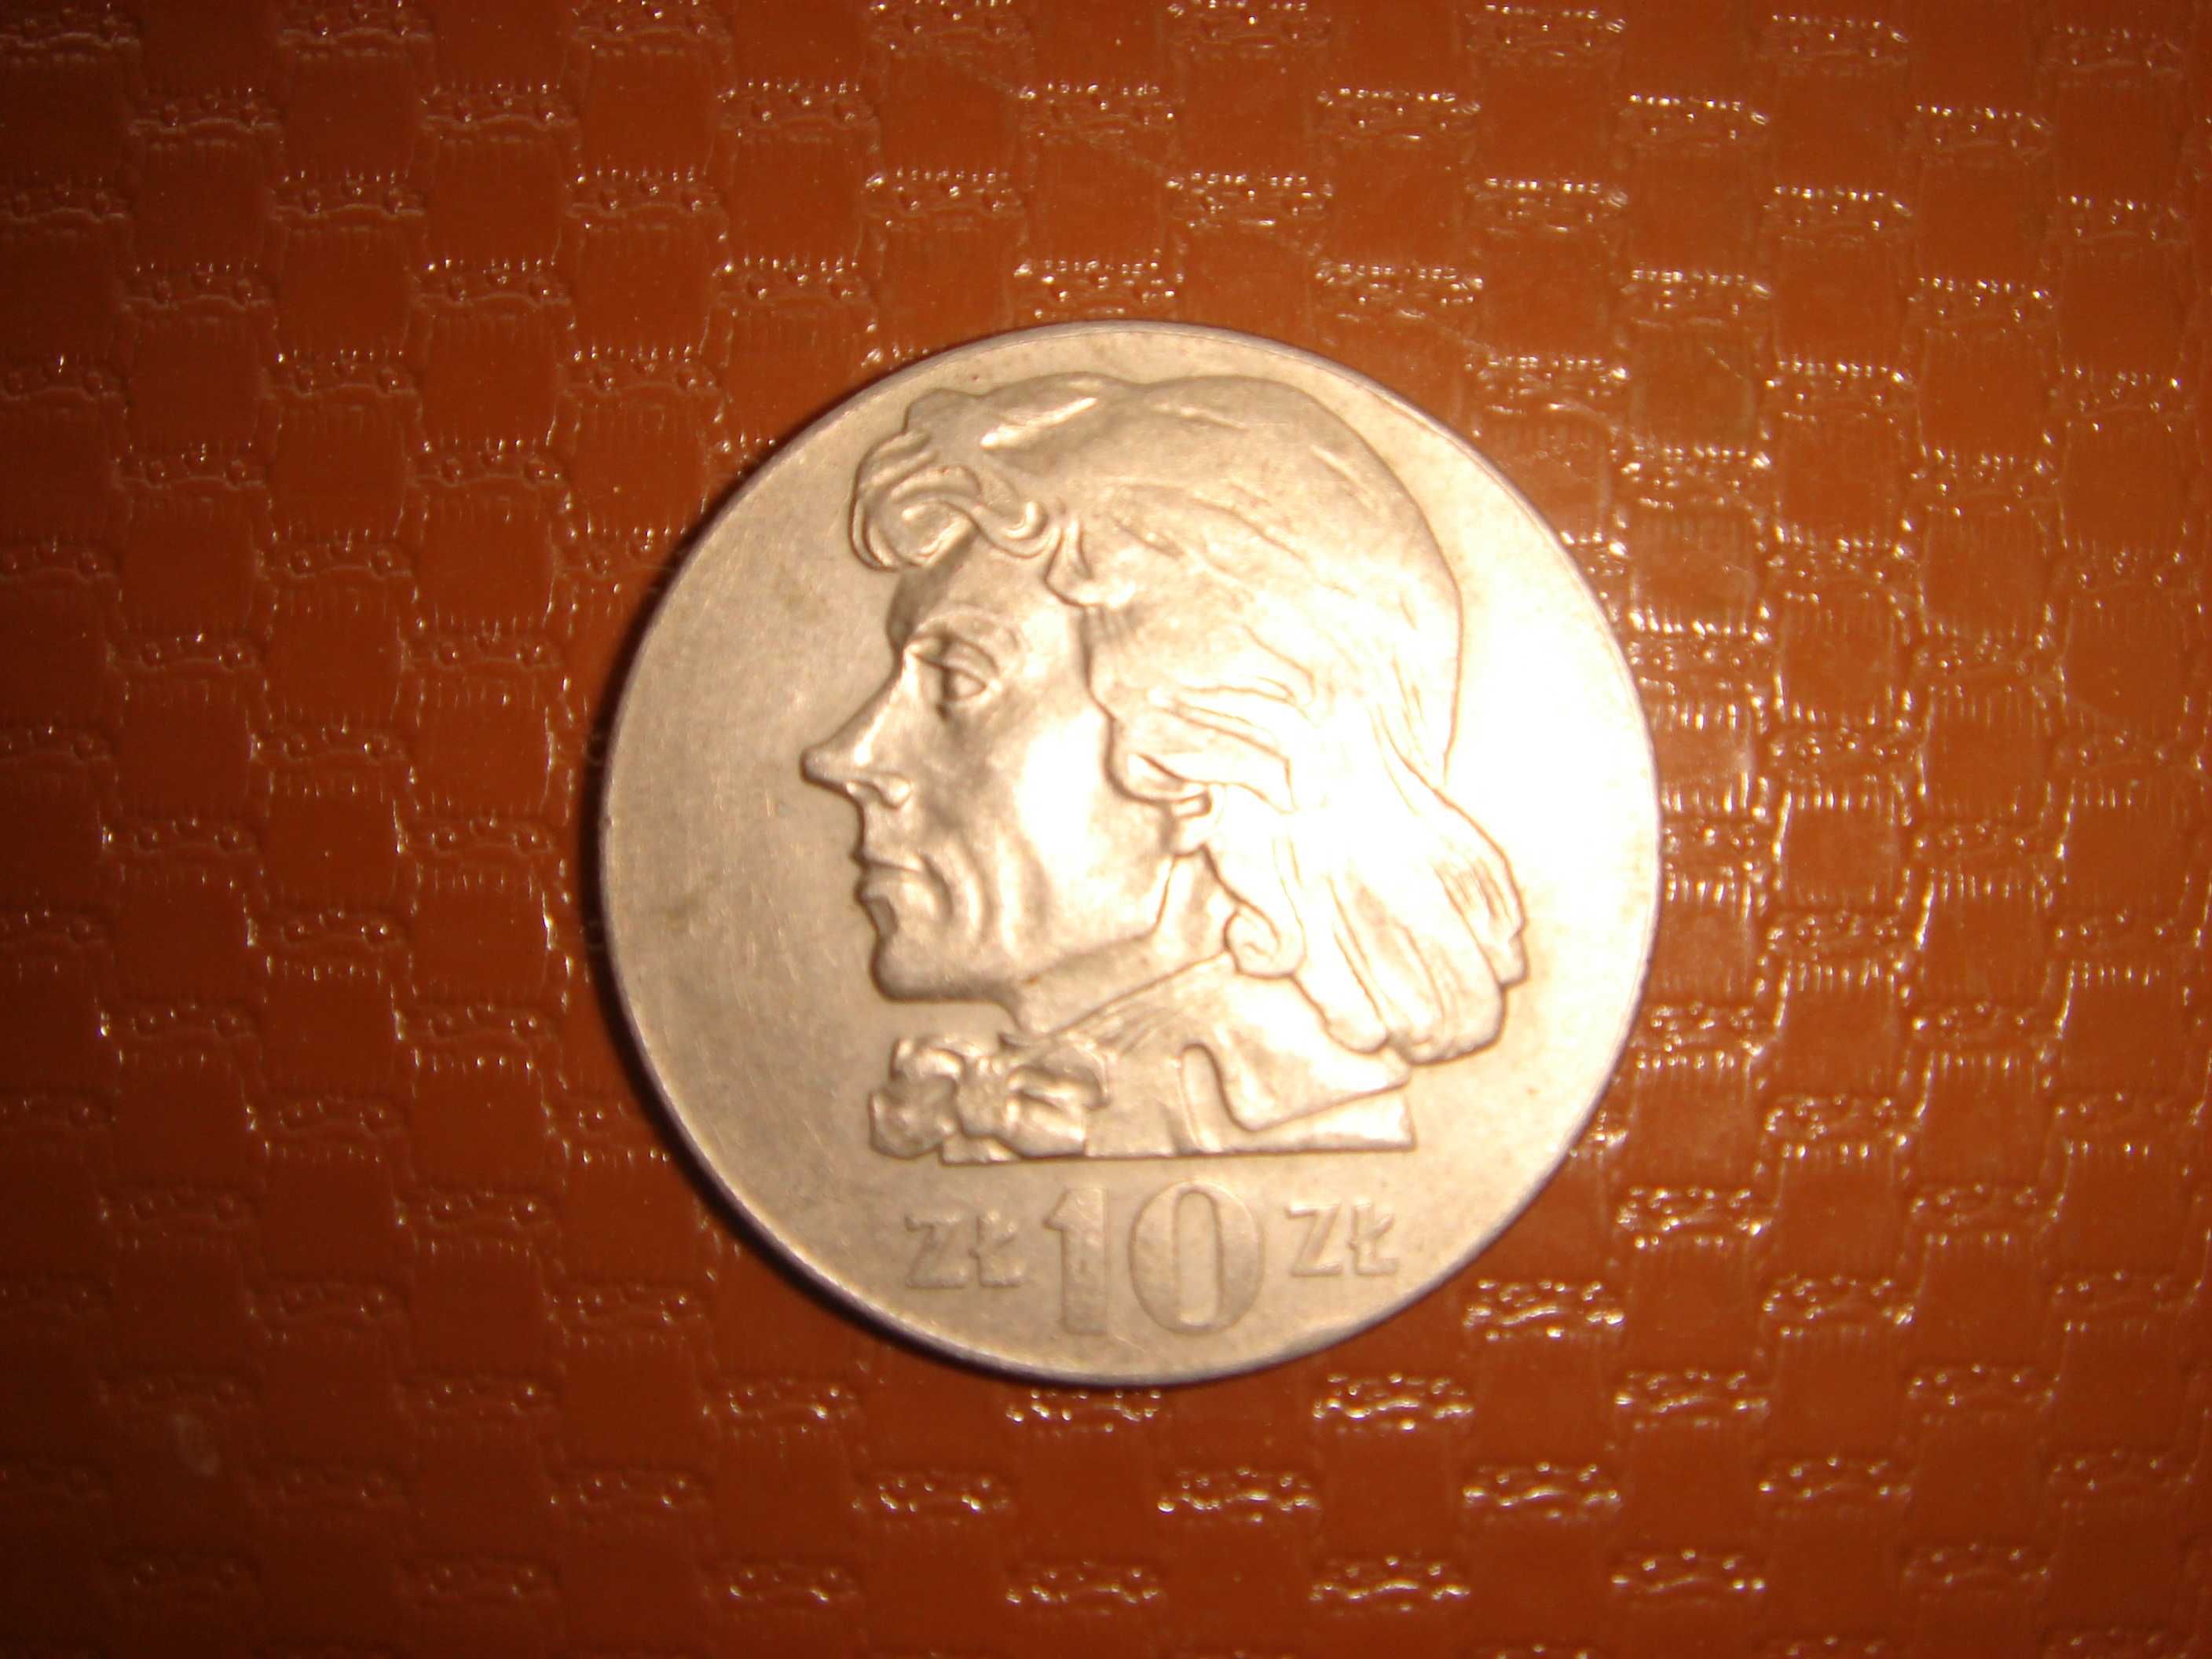 moneta 10 zł. z 1972 roku